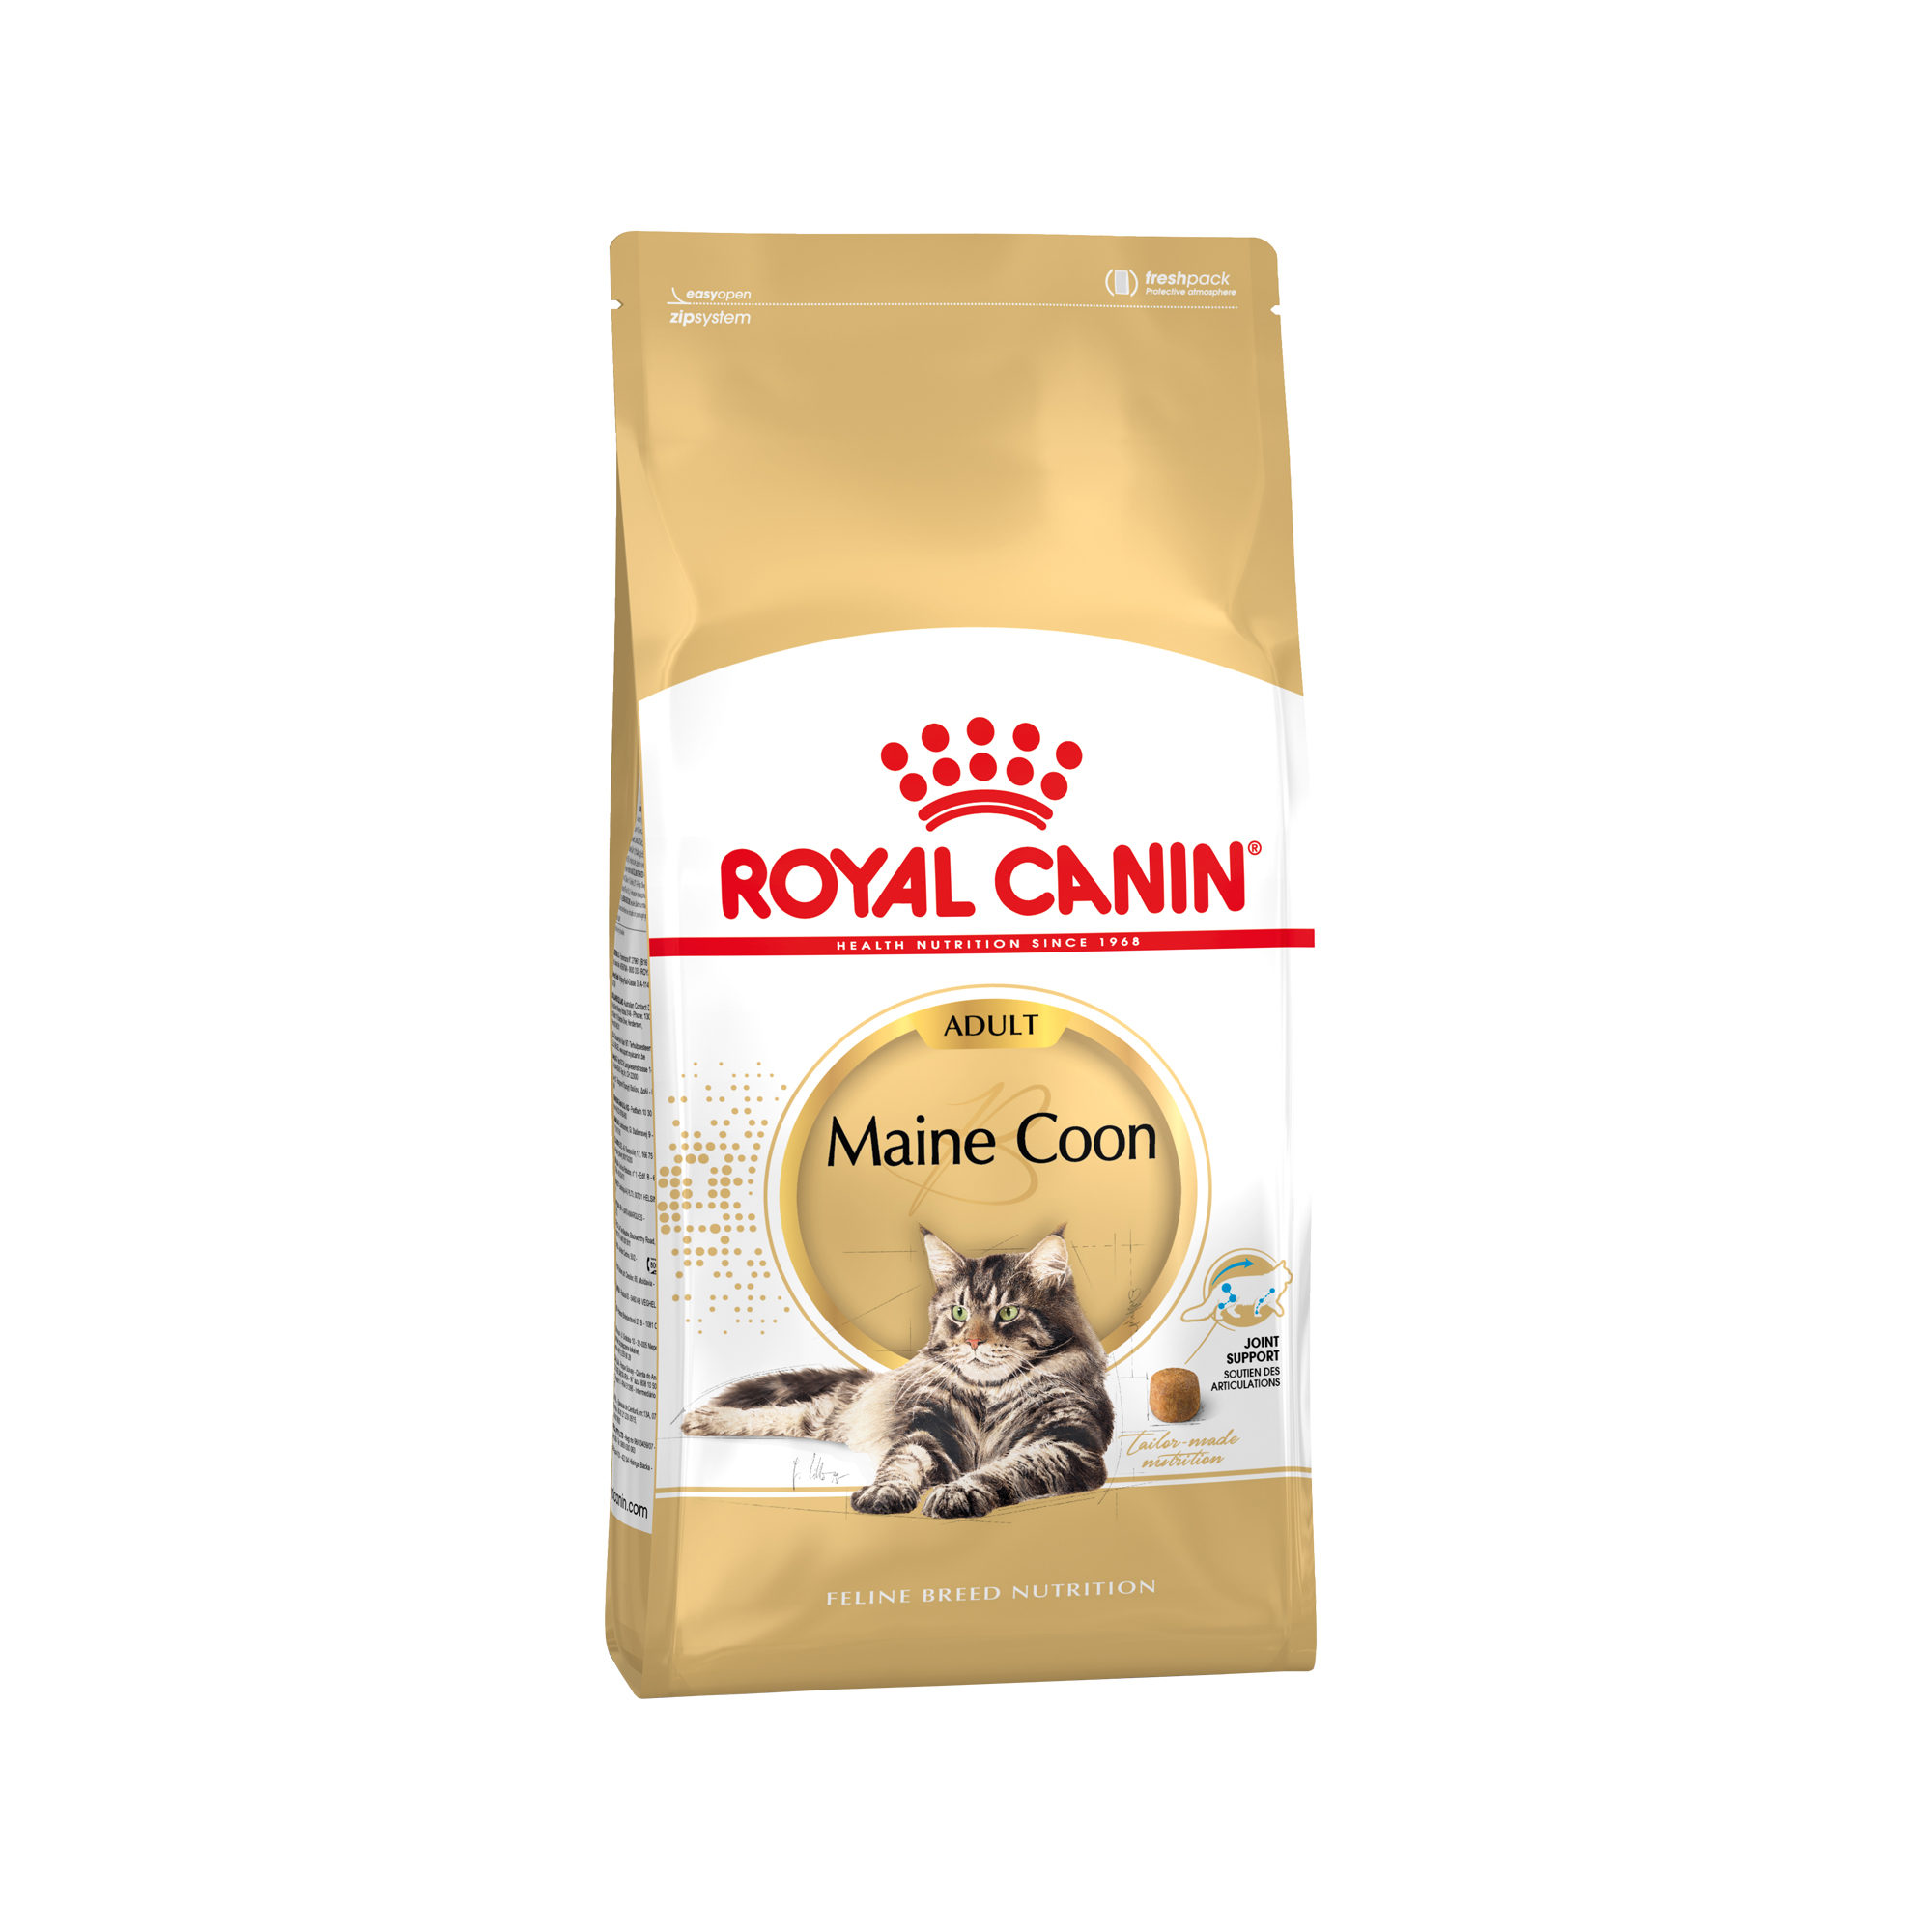 Royal Canin Maine Coon Adult Katzenfutter - 2 kg